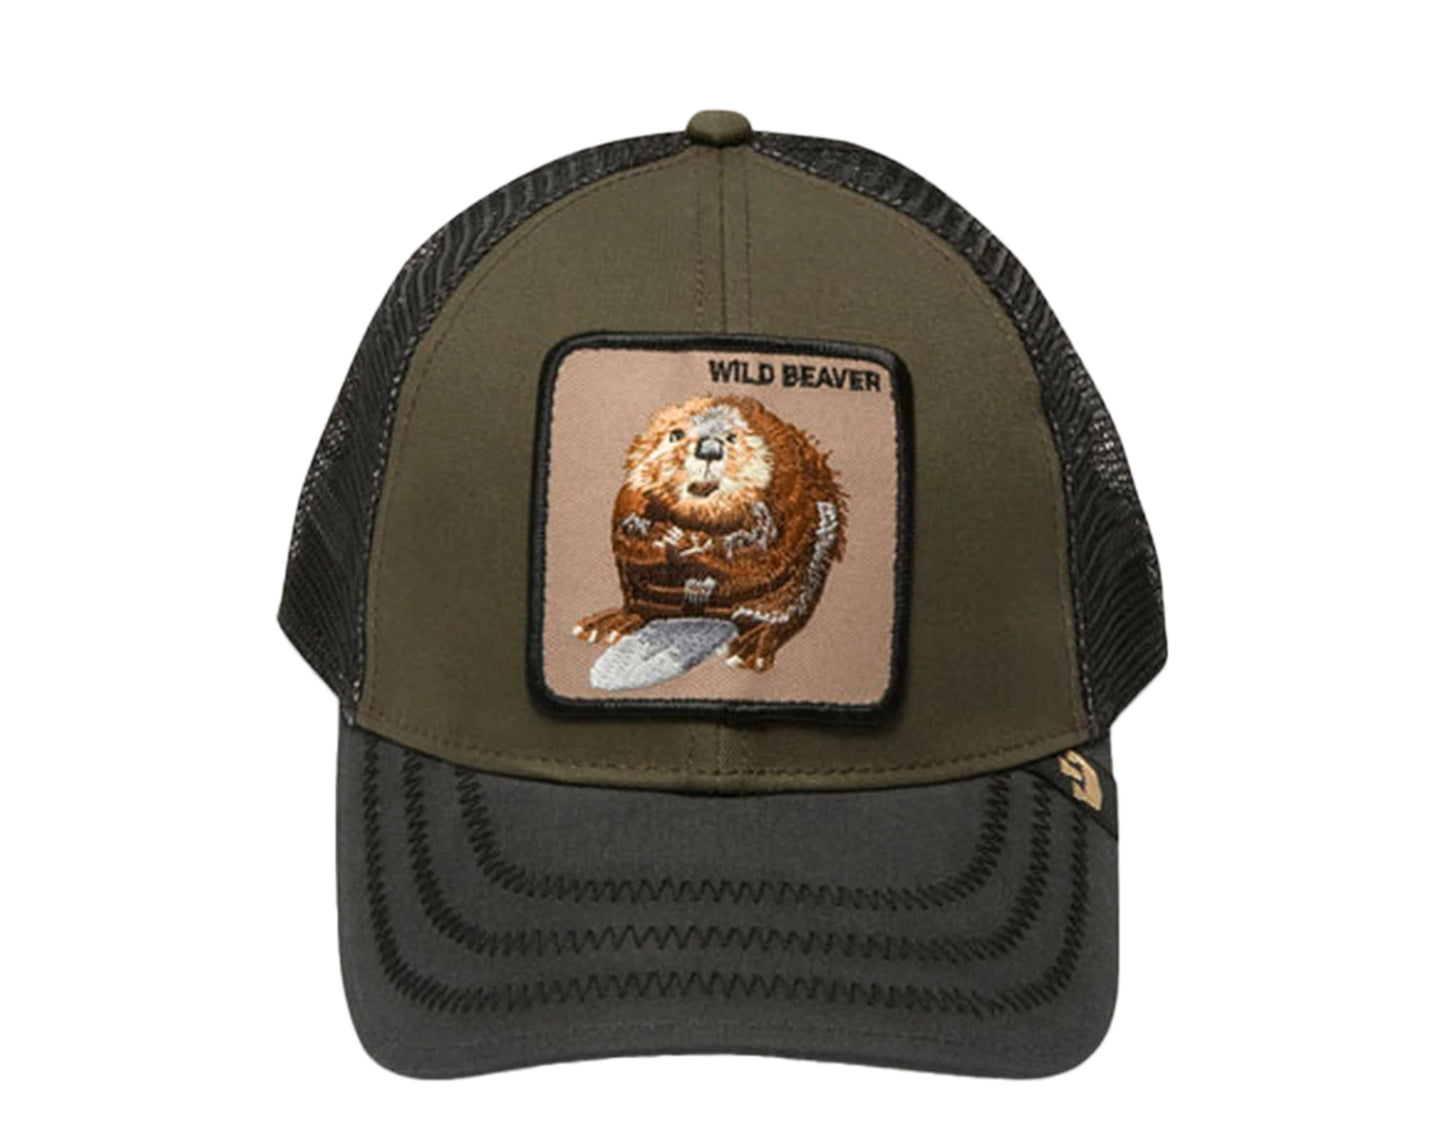 Goorin Bros Wild Beaver Olive/Black Trucker Hat 101-2154-OLI